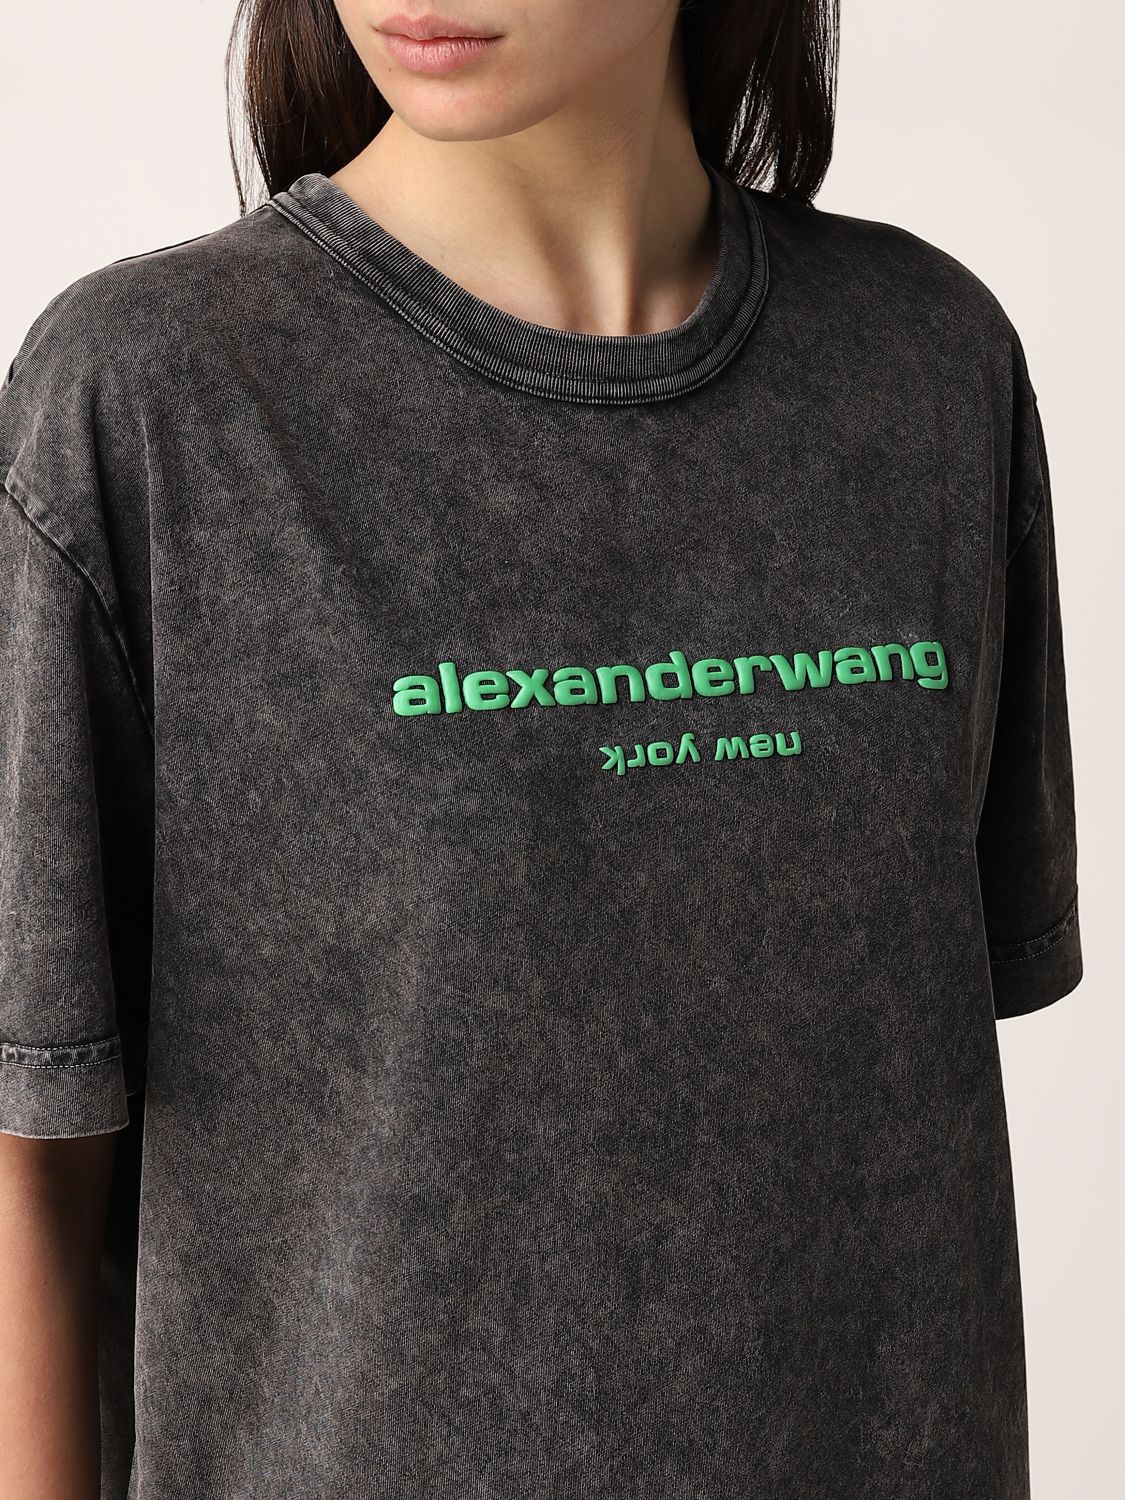 alexanderwang Tシャツ少したたみジワがあります